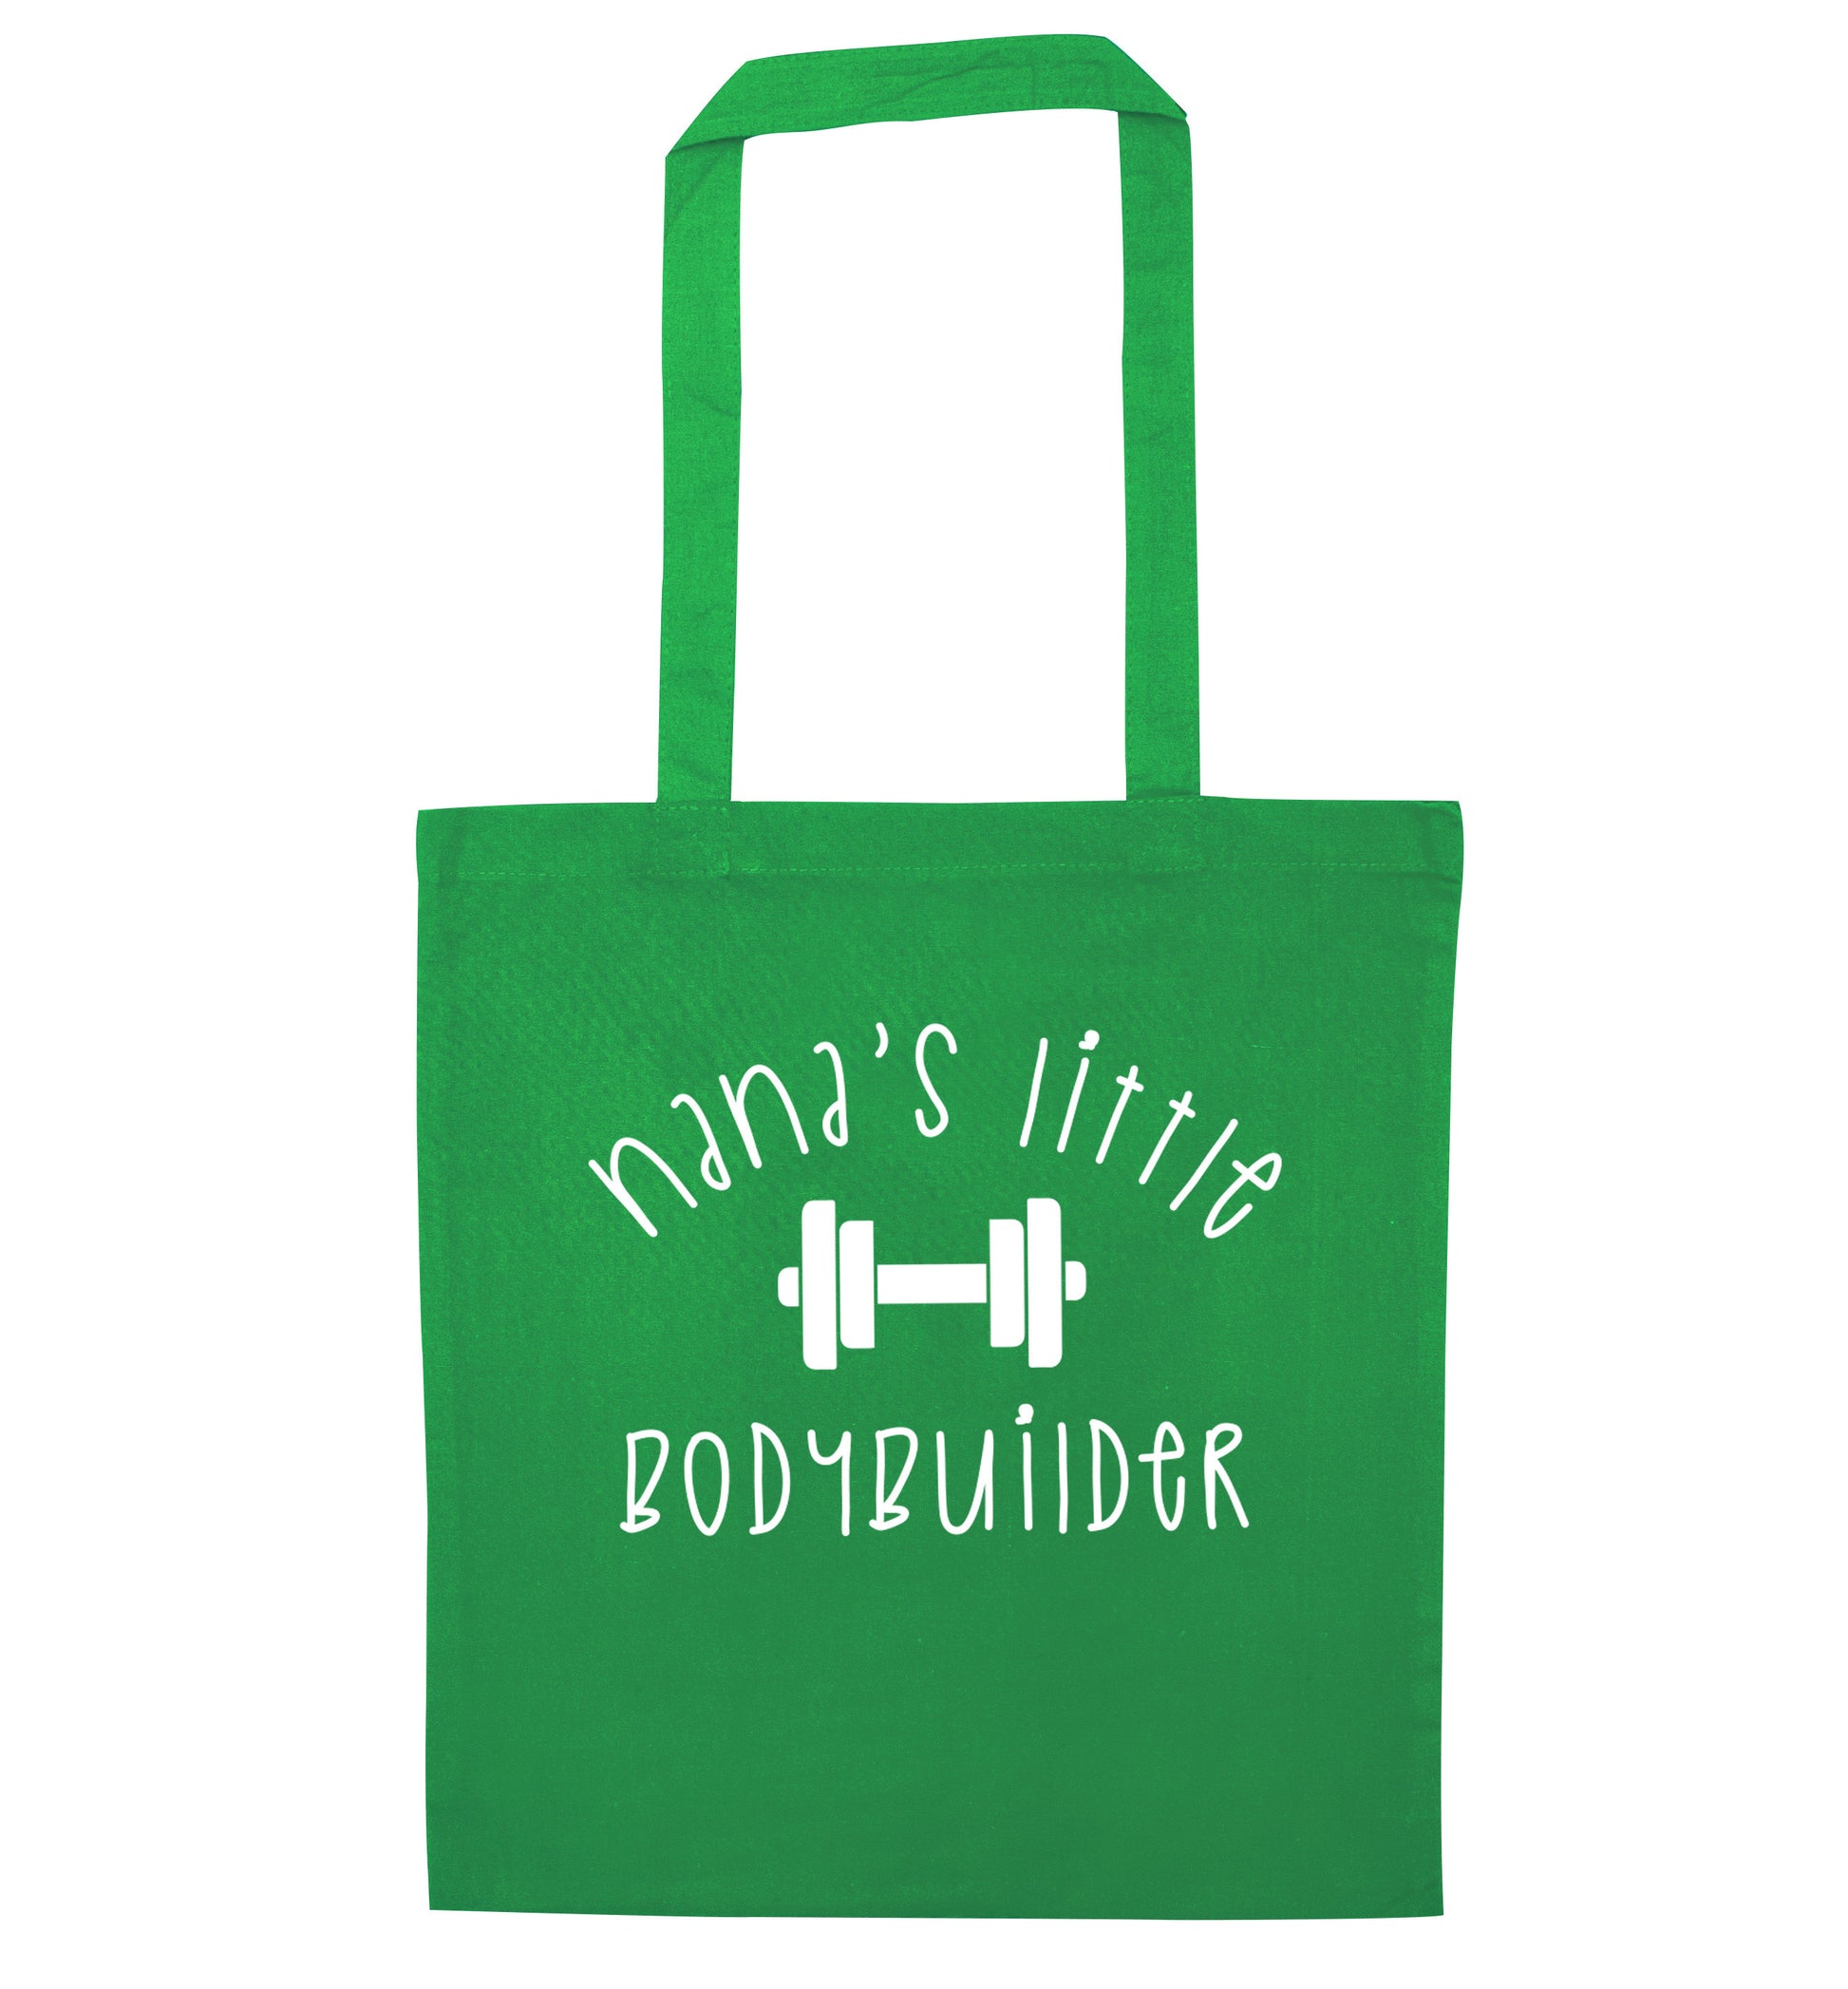 Nana's little bodybuilder green tote bag